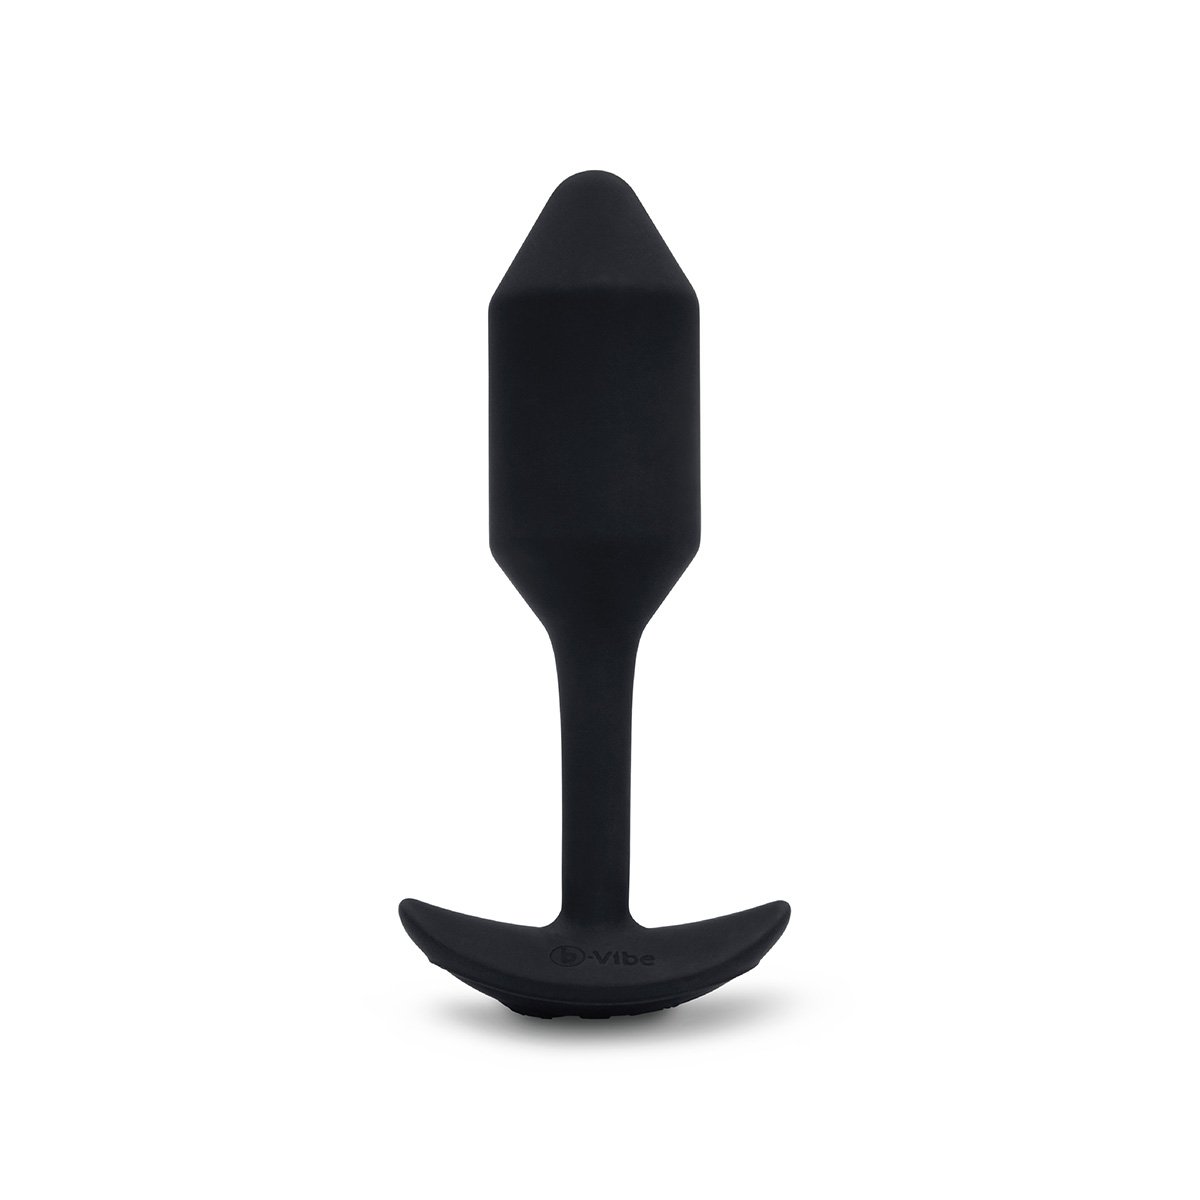 B-Vibe Snug Plug Vibrating - Buy At Luxury Toy X - Free 3-Day Shipping